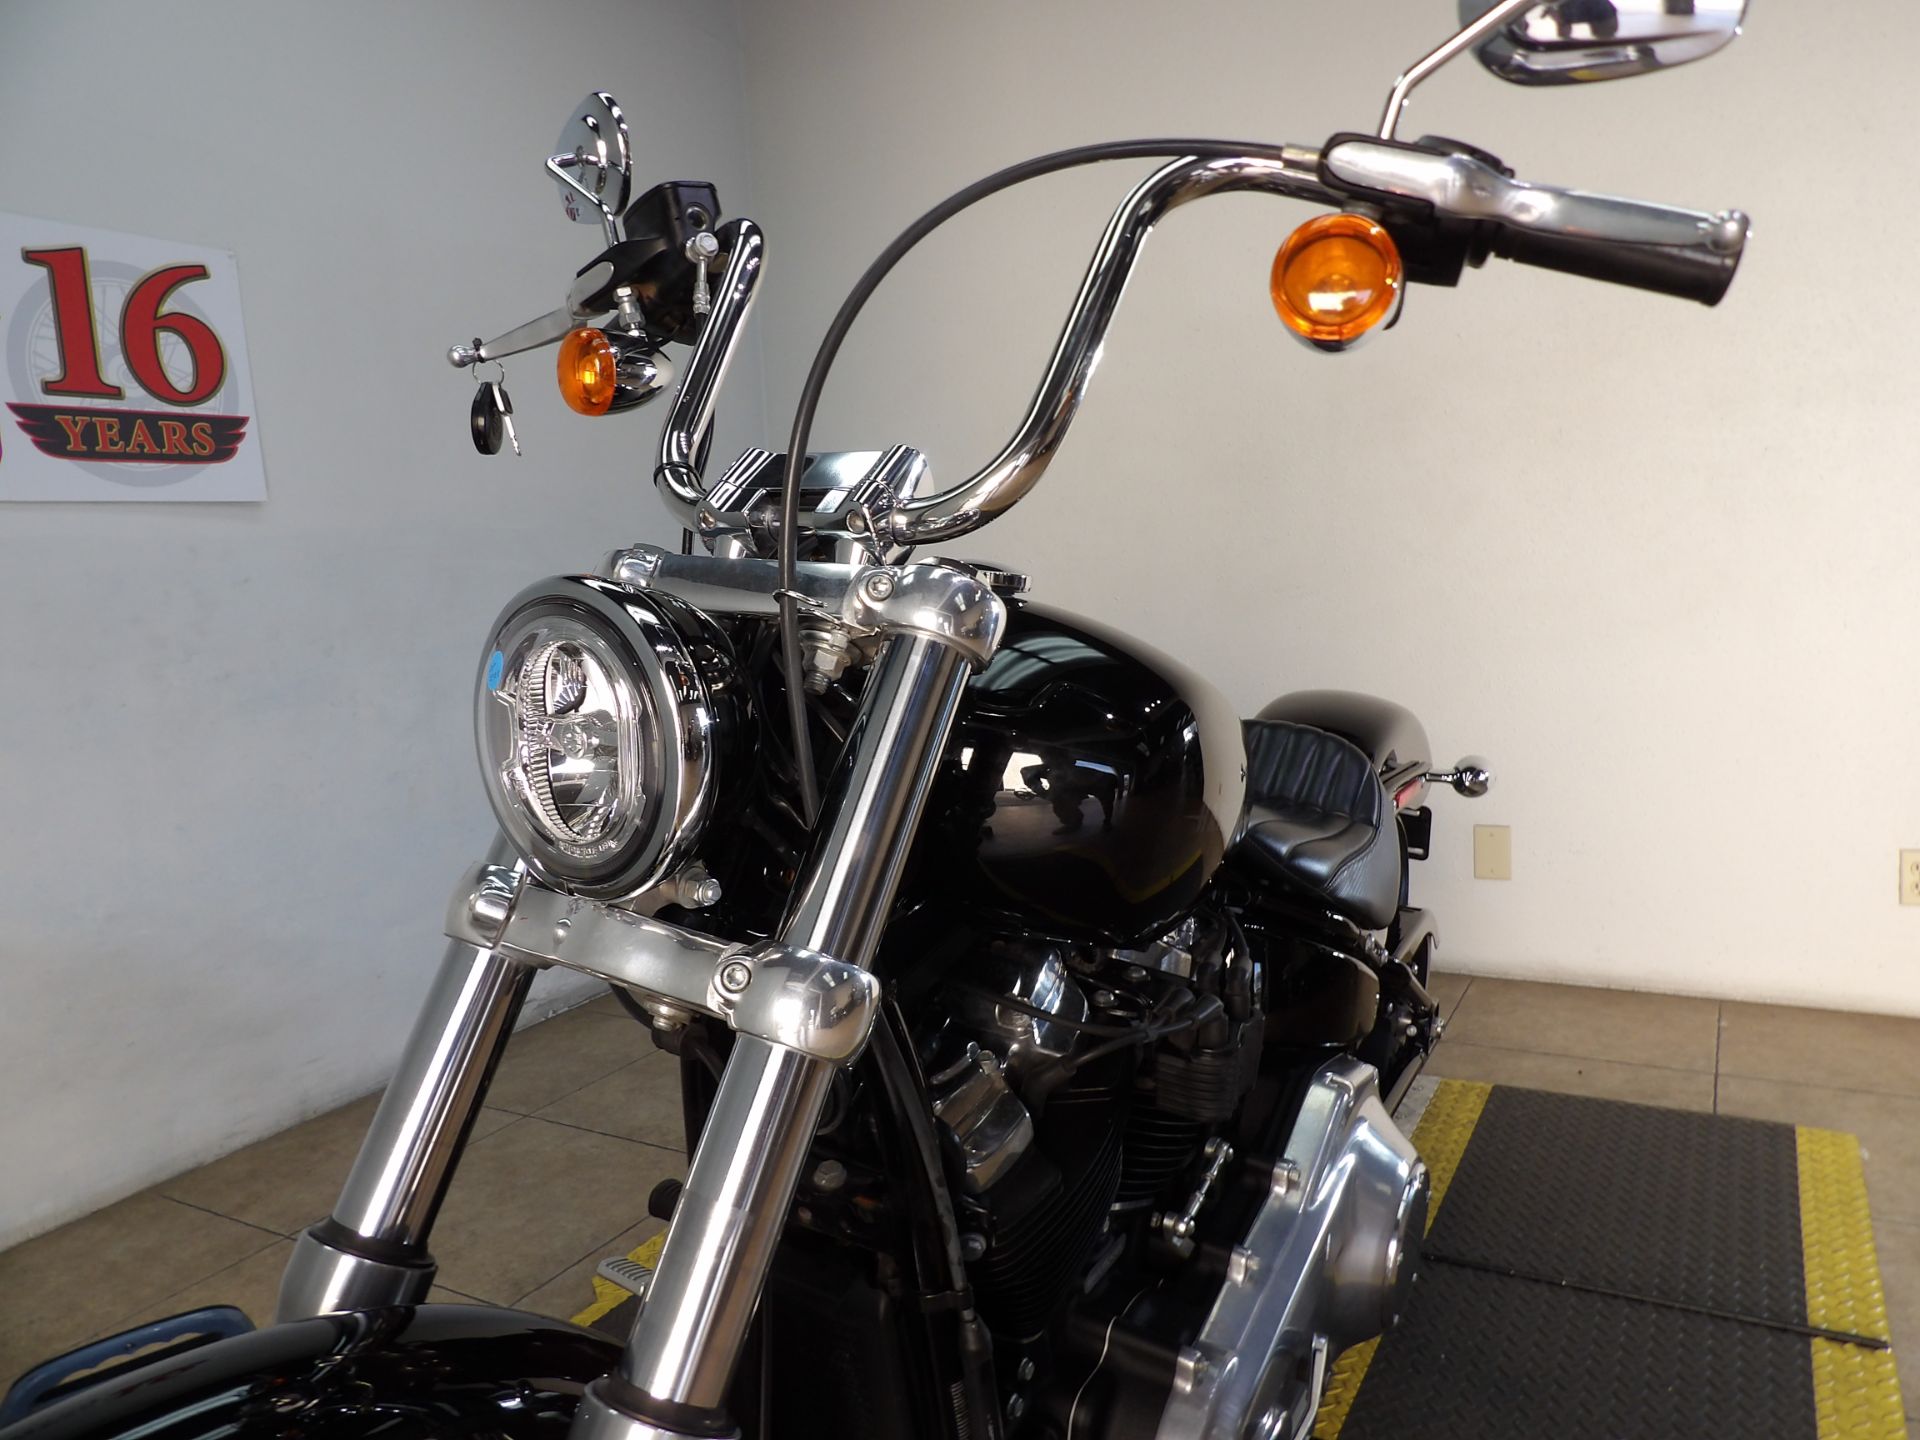 2020 Harley-Davidson Softail® Standard in Temecula, California - Photo 8